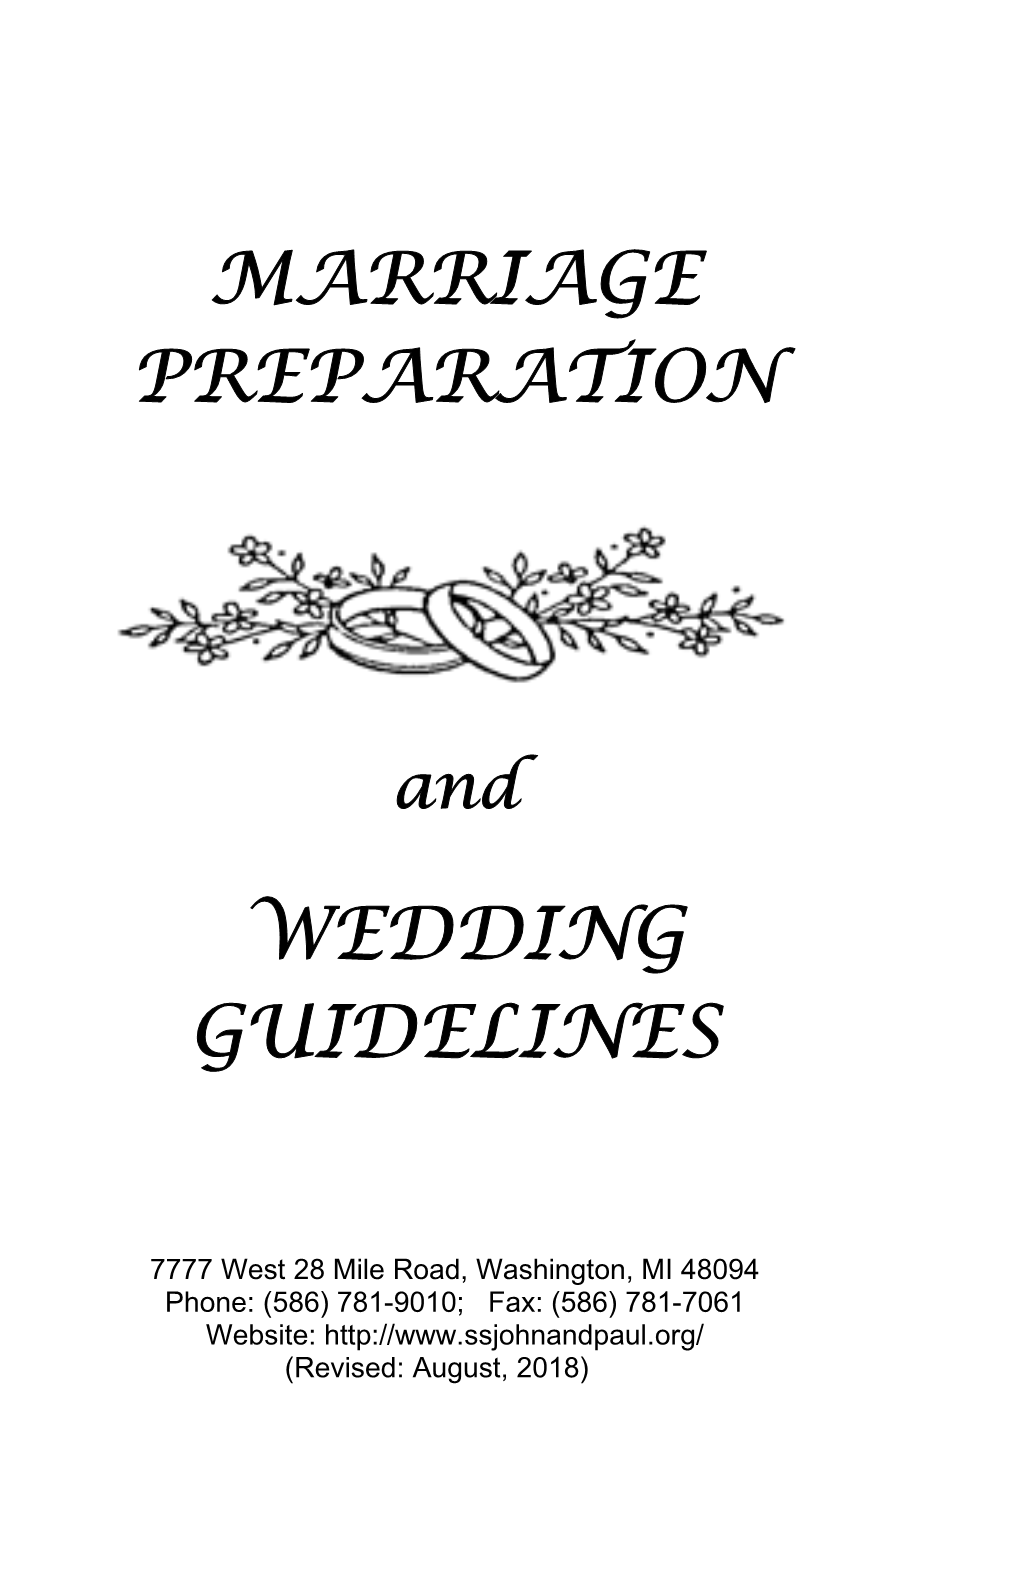 Marriage Preparation Wedding Guidelines